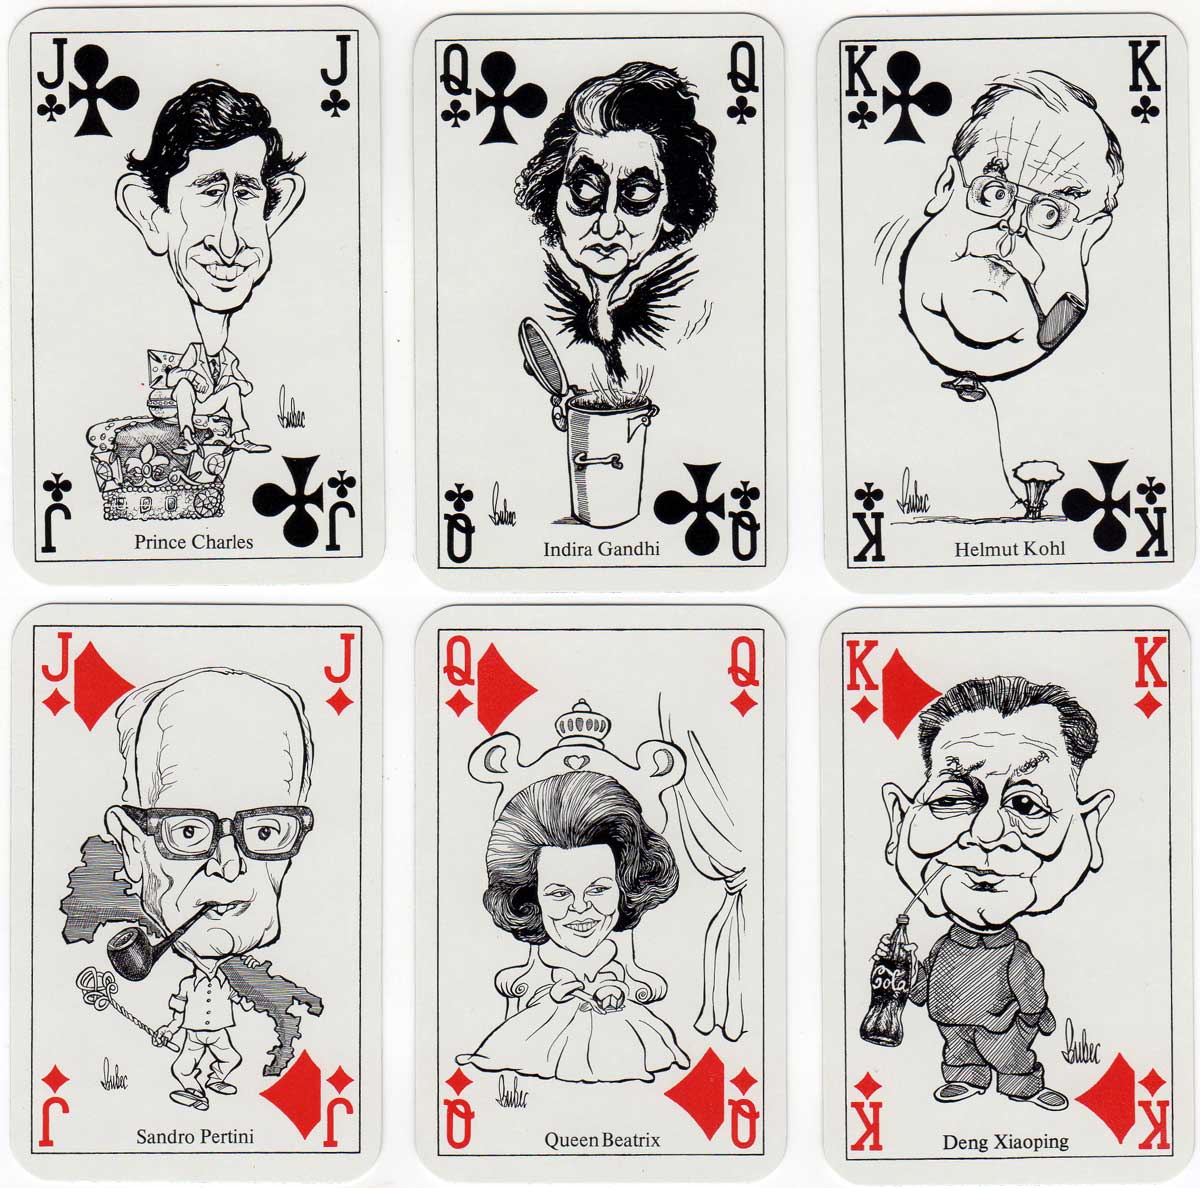 Polit-Poker designed by Bubec (Lutz Backes), 1984